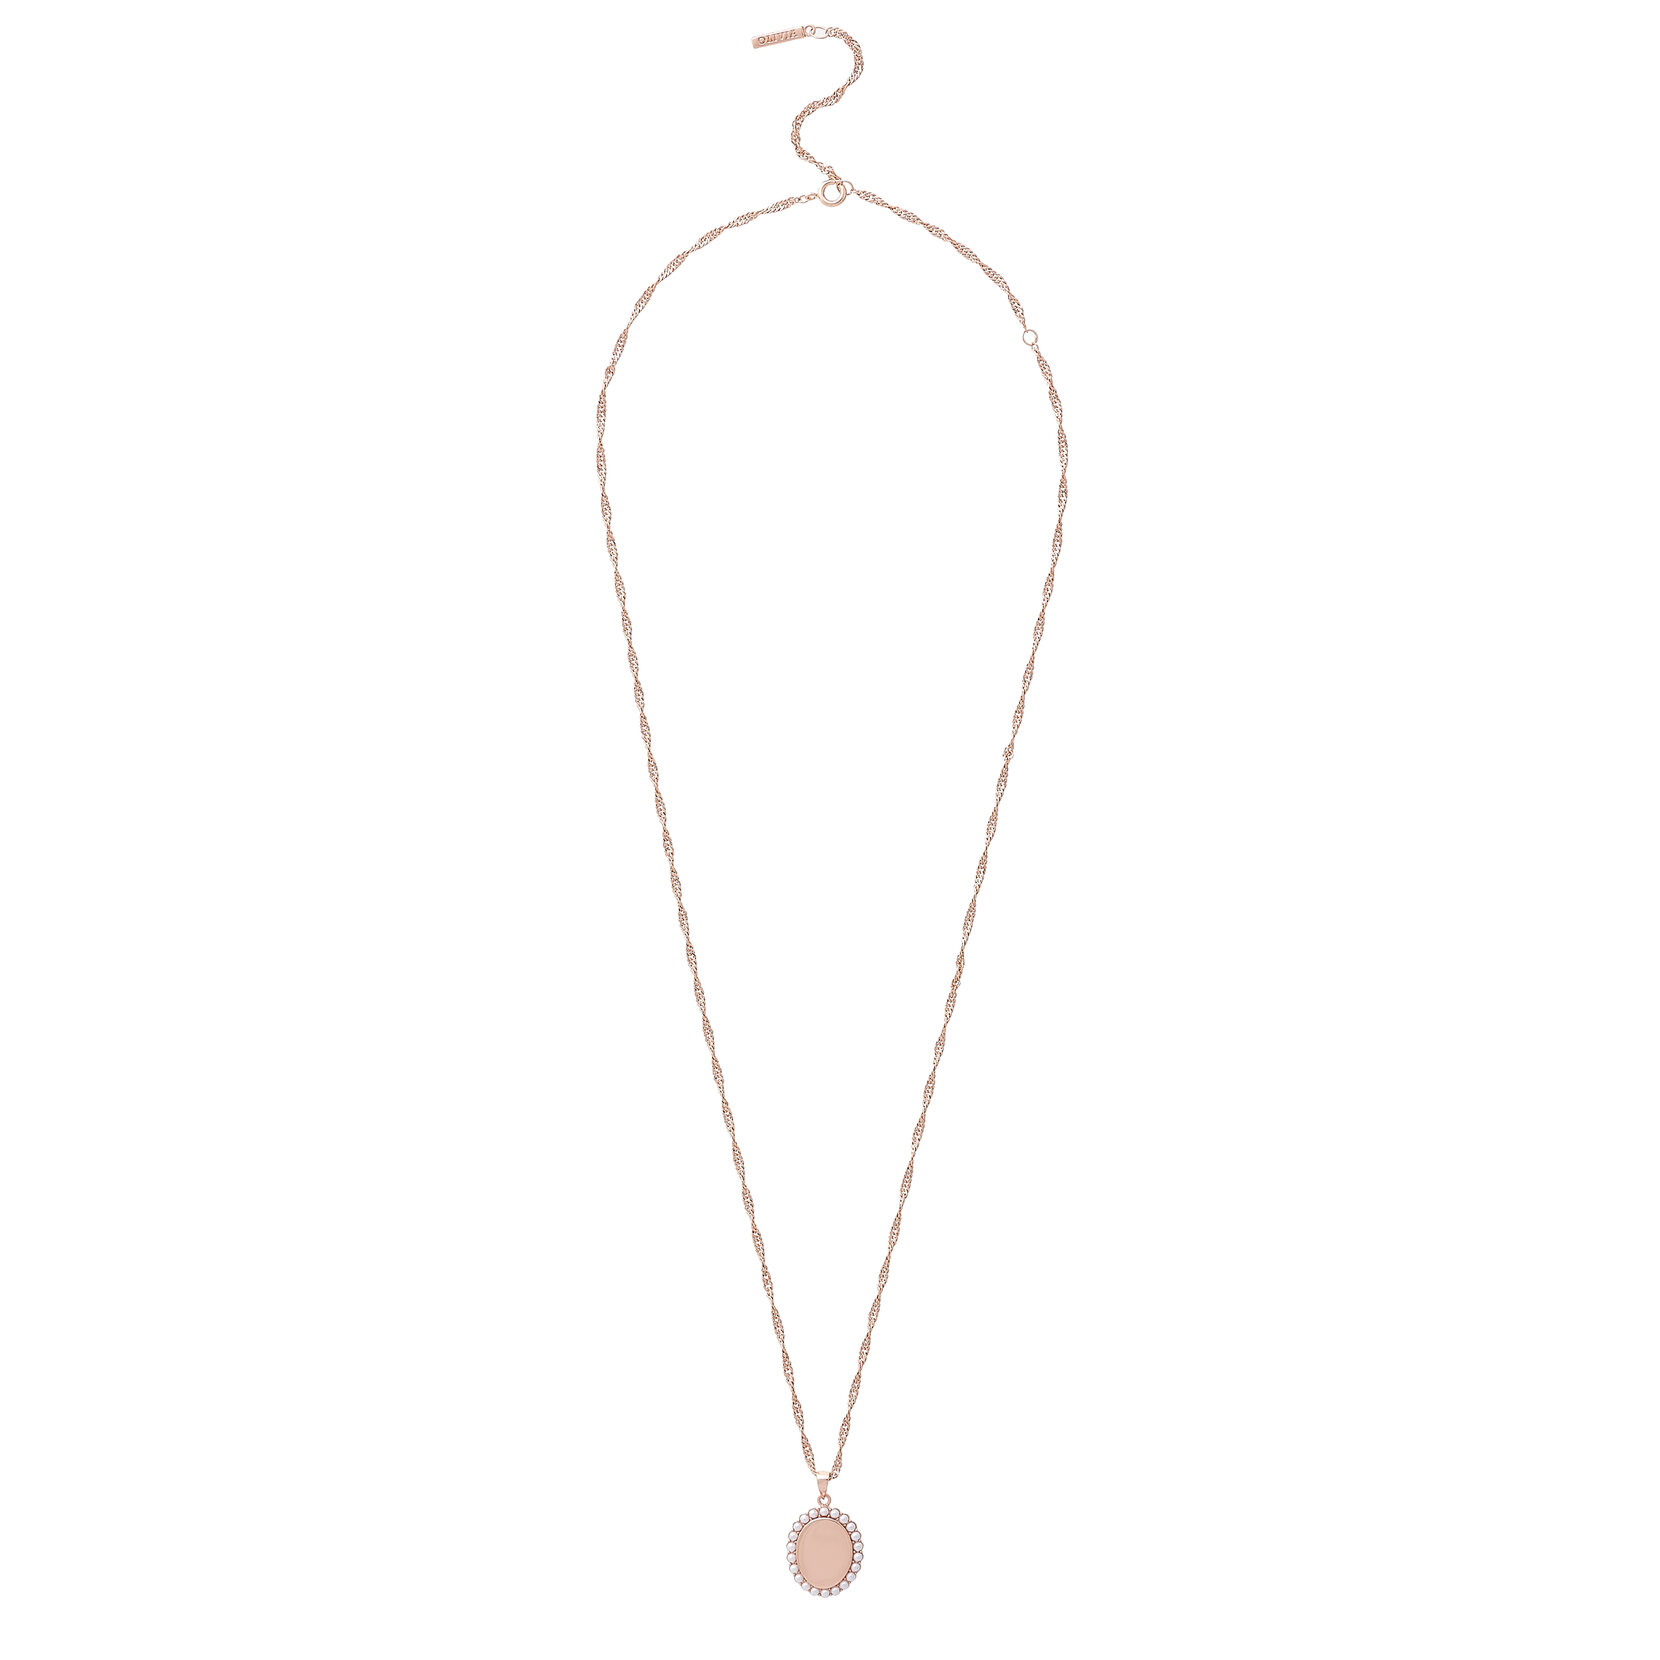 Collier Antique Pearl or rose à pendentif